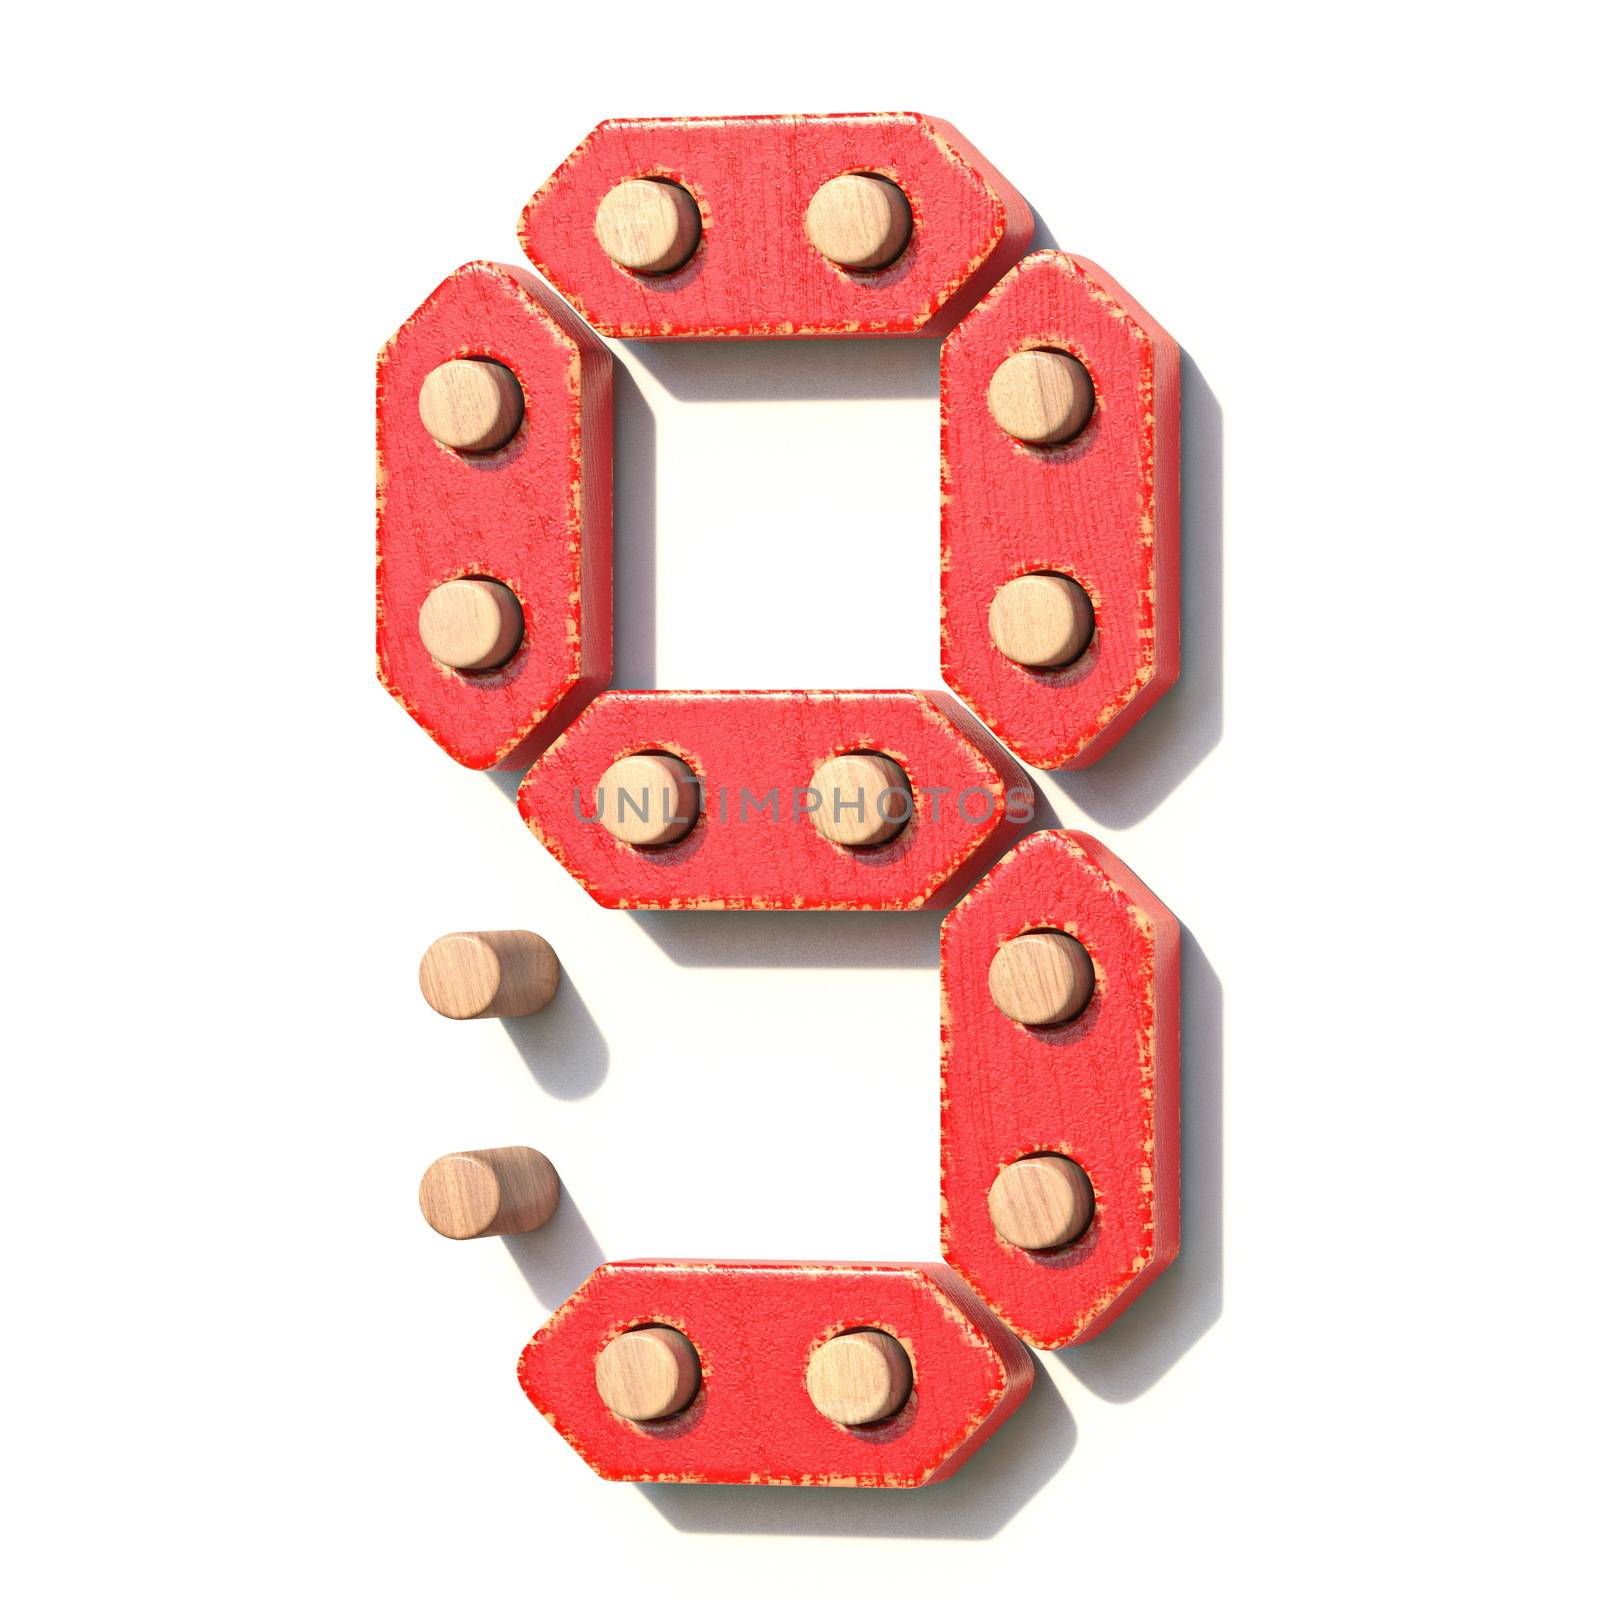 Wooden toy red digital number 9 NINE 3D by djmilic